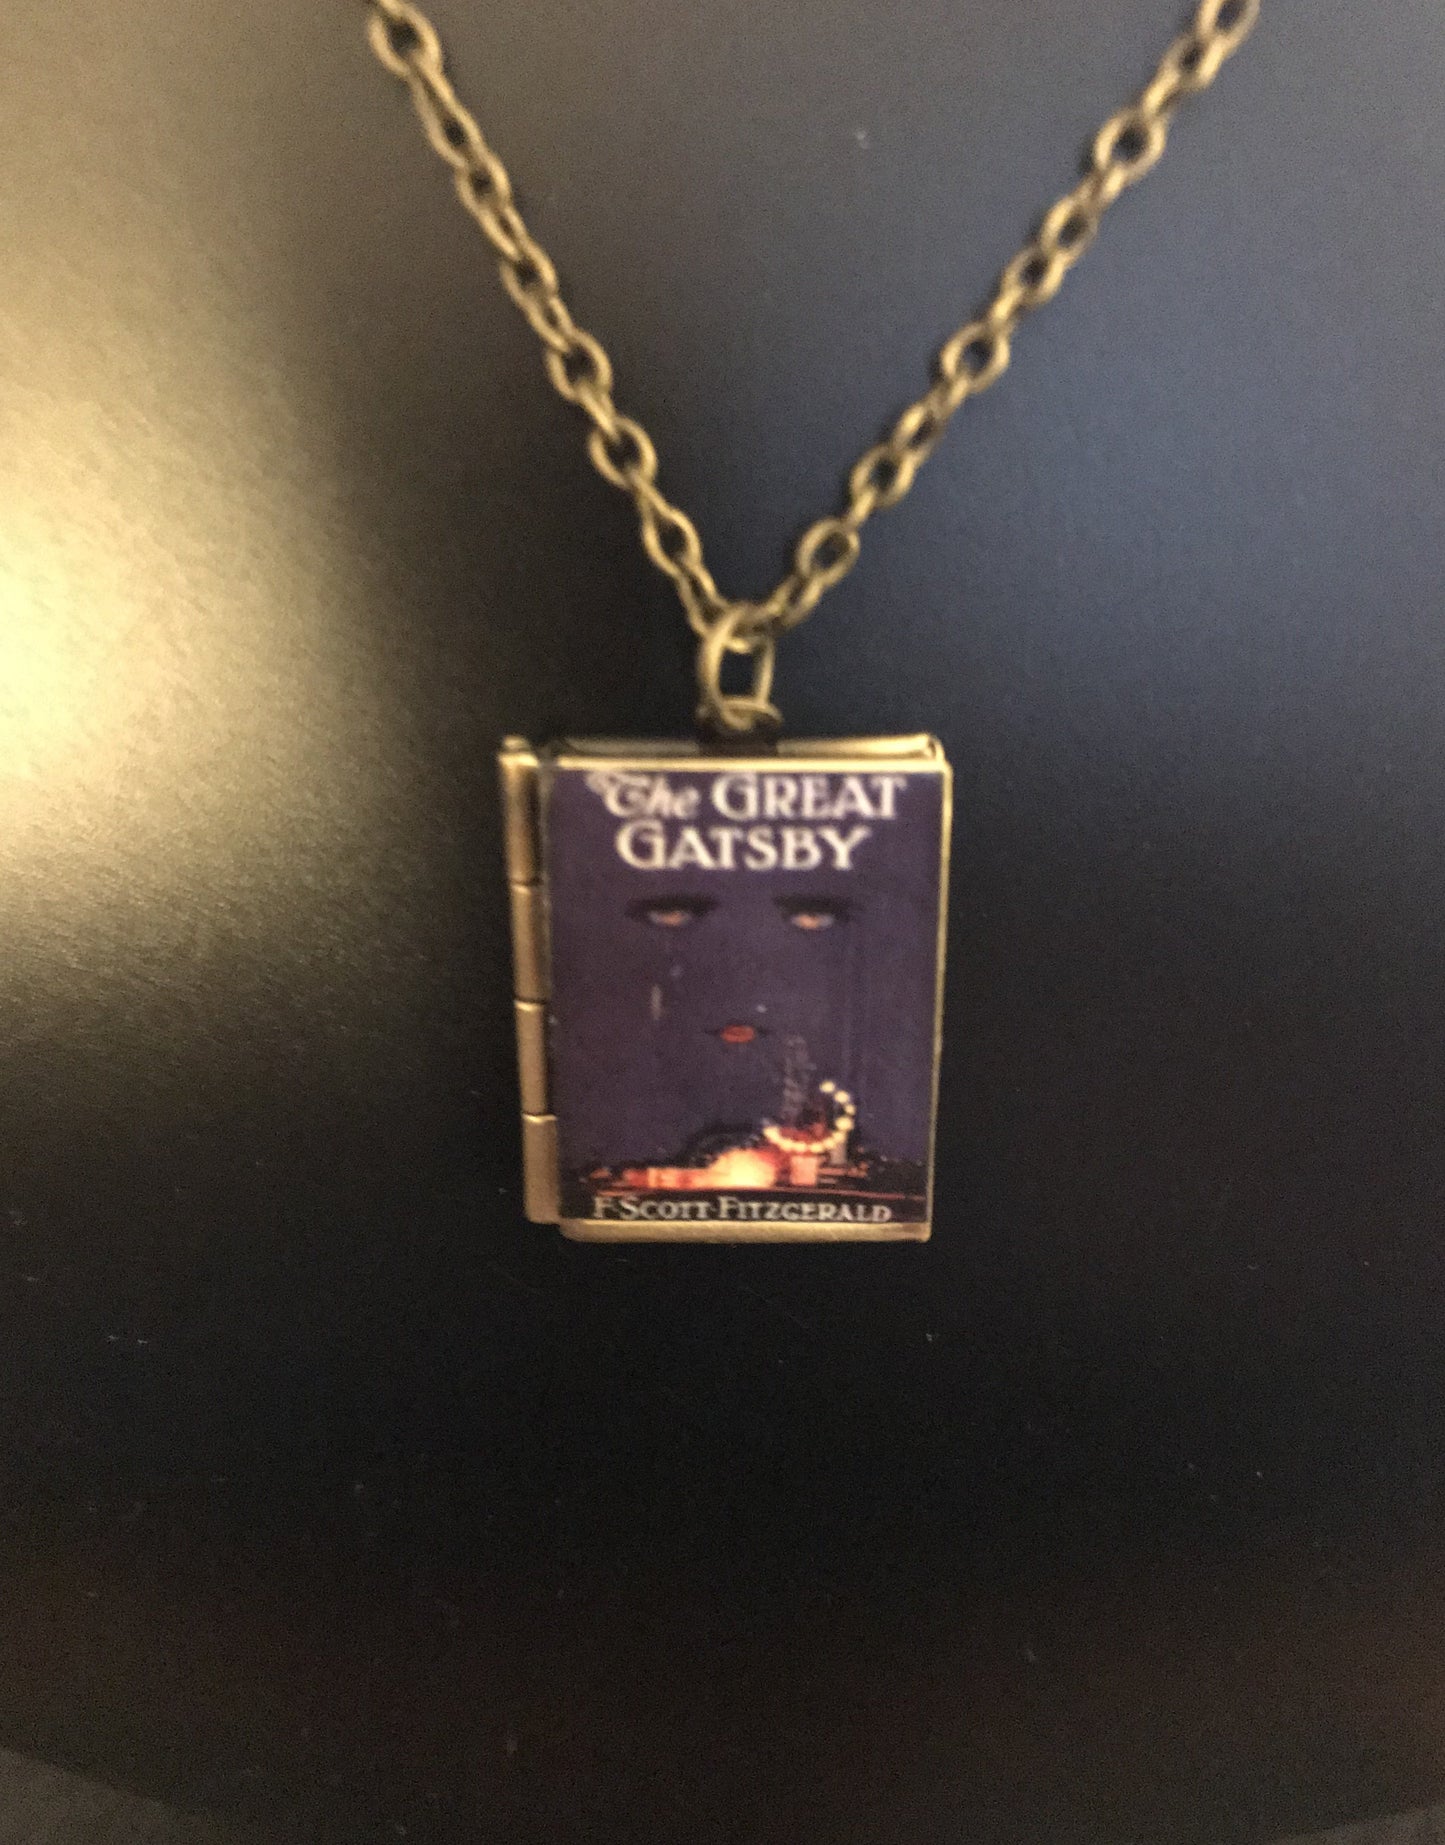 Book Locket "Great Gatsby" Necklace Bronze